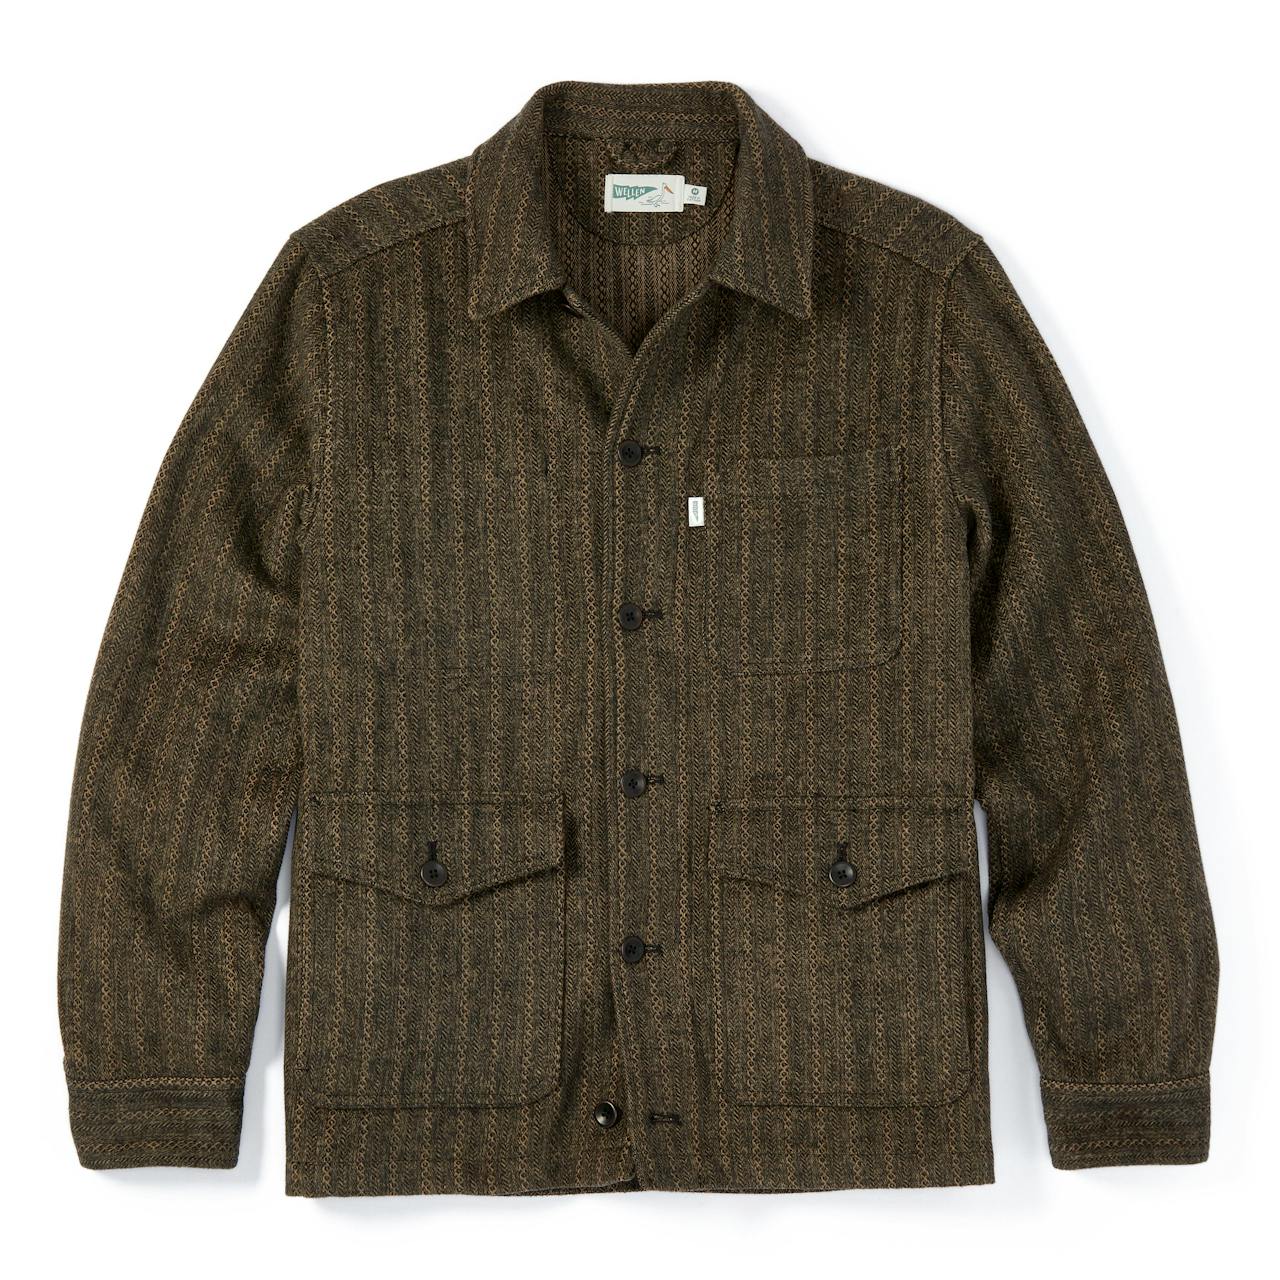 1920s Men’s Coats & Jackets History Blanket Chore Coat $198.00 AT vintagedancer.com